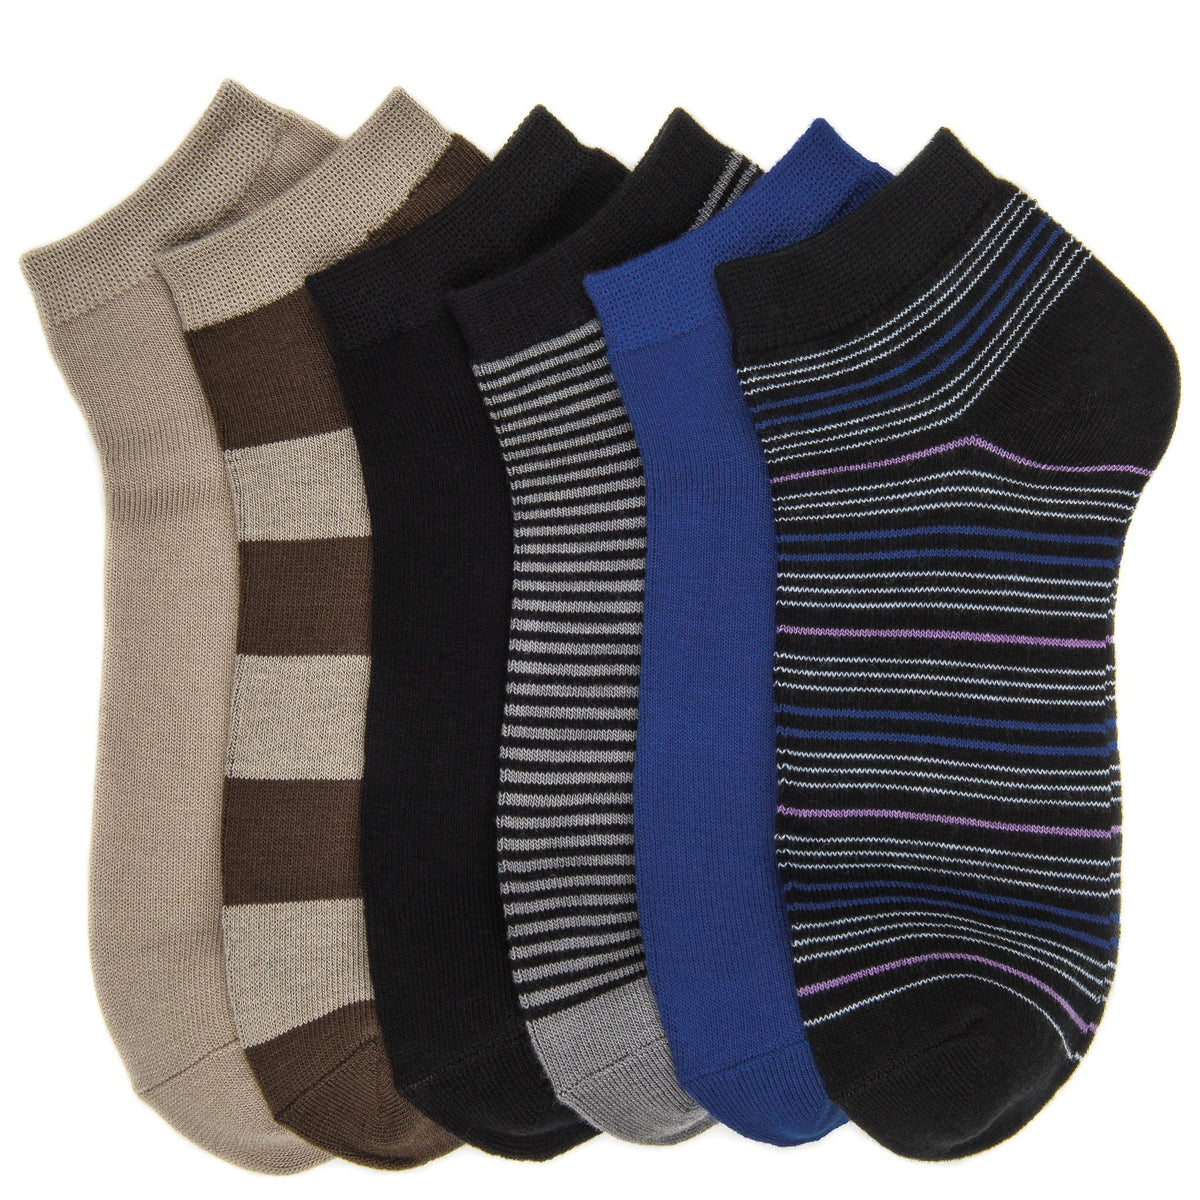 Women's Soft Premium Low Cut Socks - 6 Pairs - Set 2